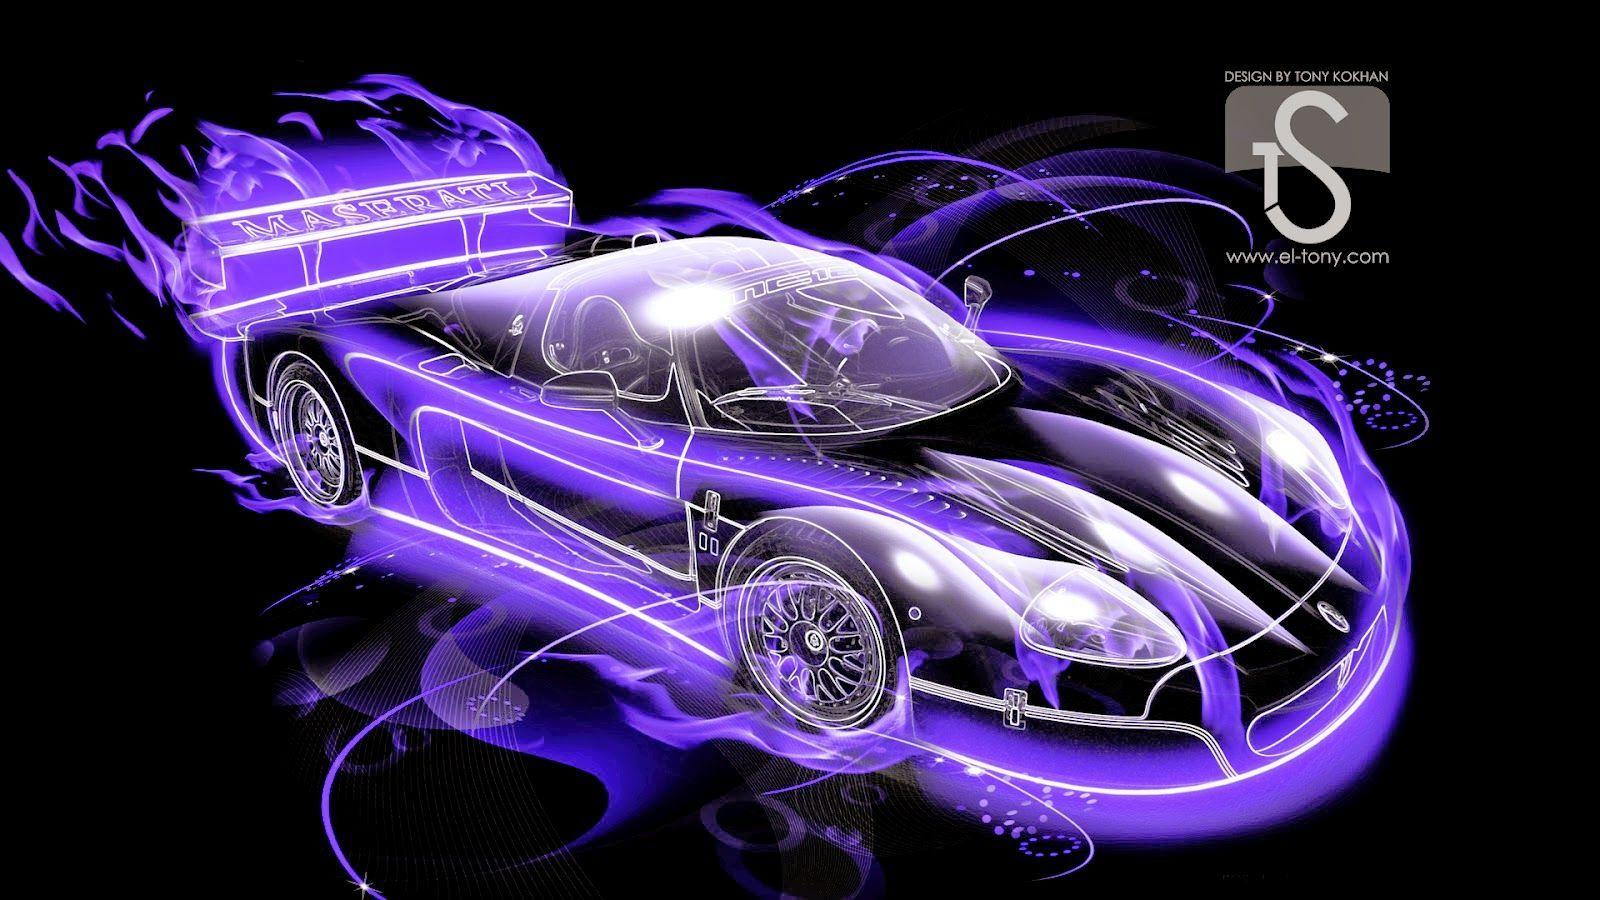 Fire 3D wallpaper of cars for desktop. Cool car picture, Cool wallpaper cars, Car wallpaper